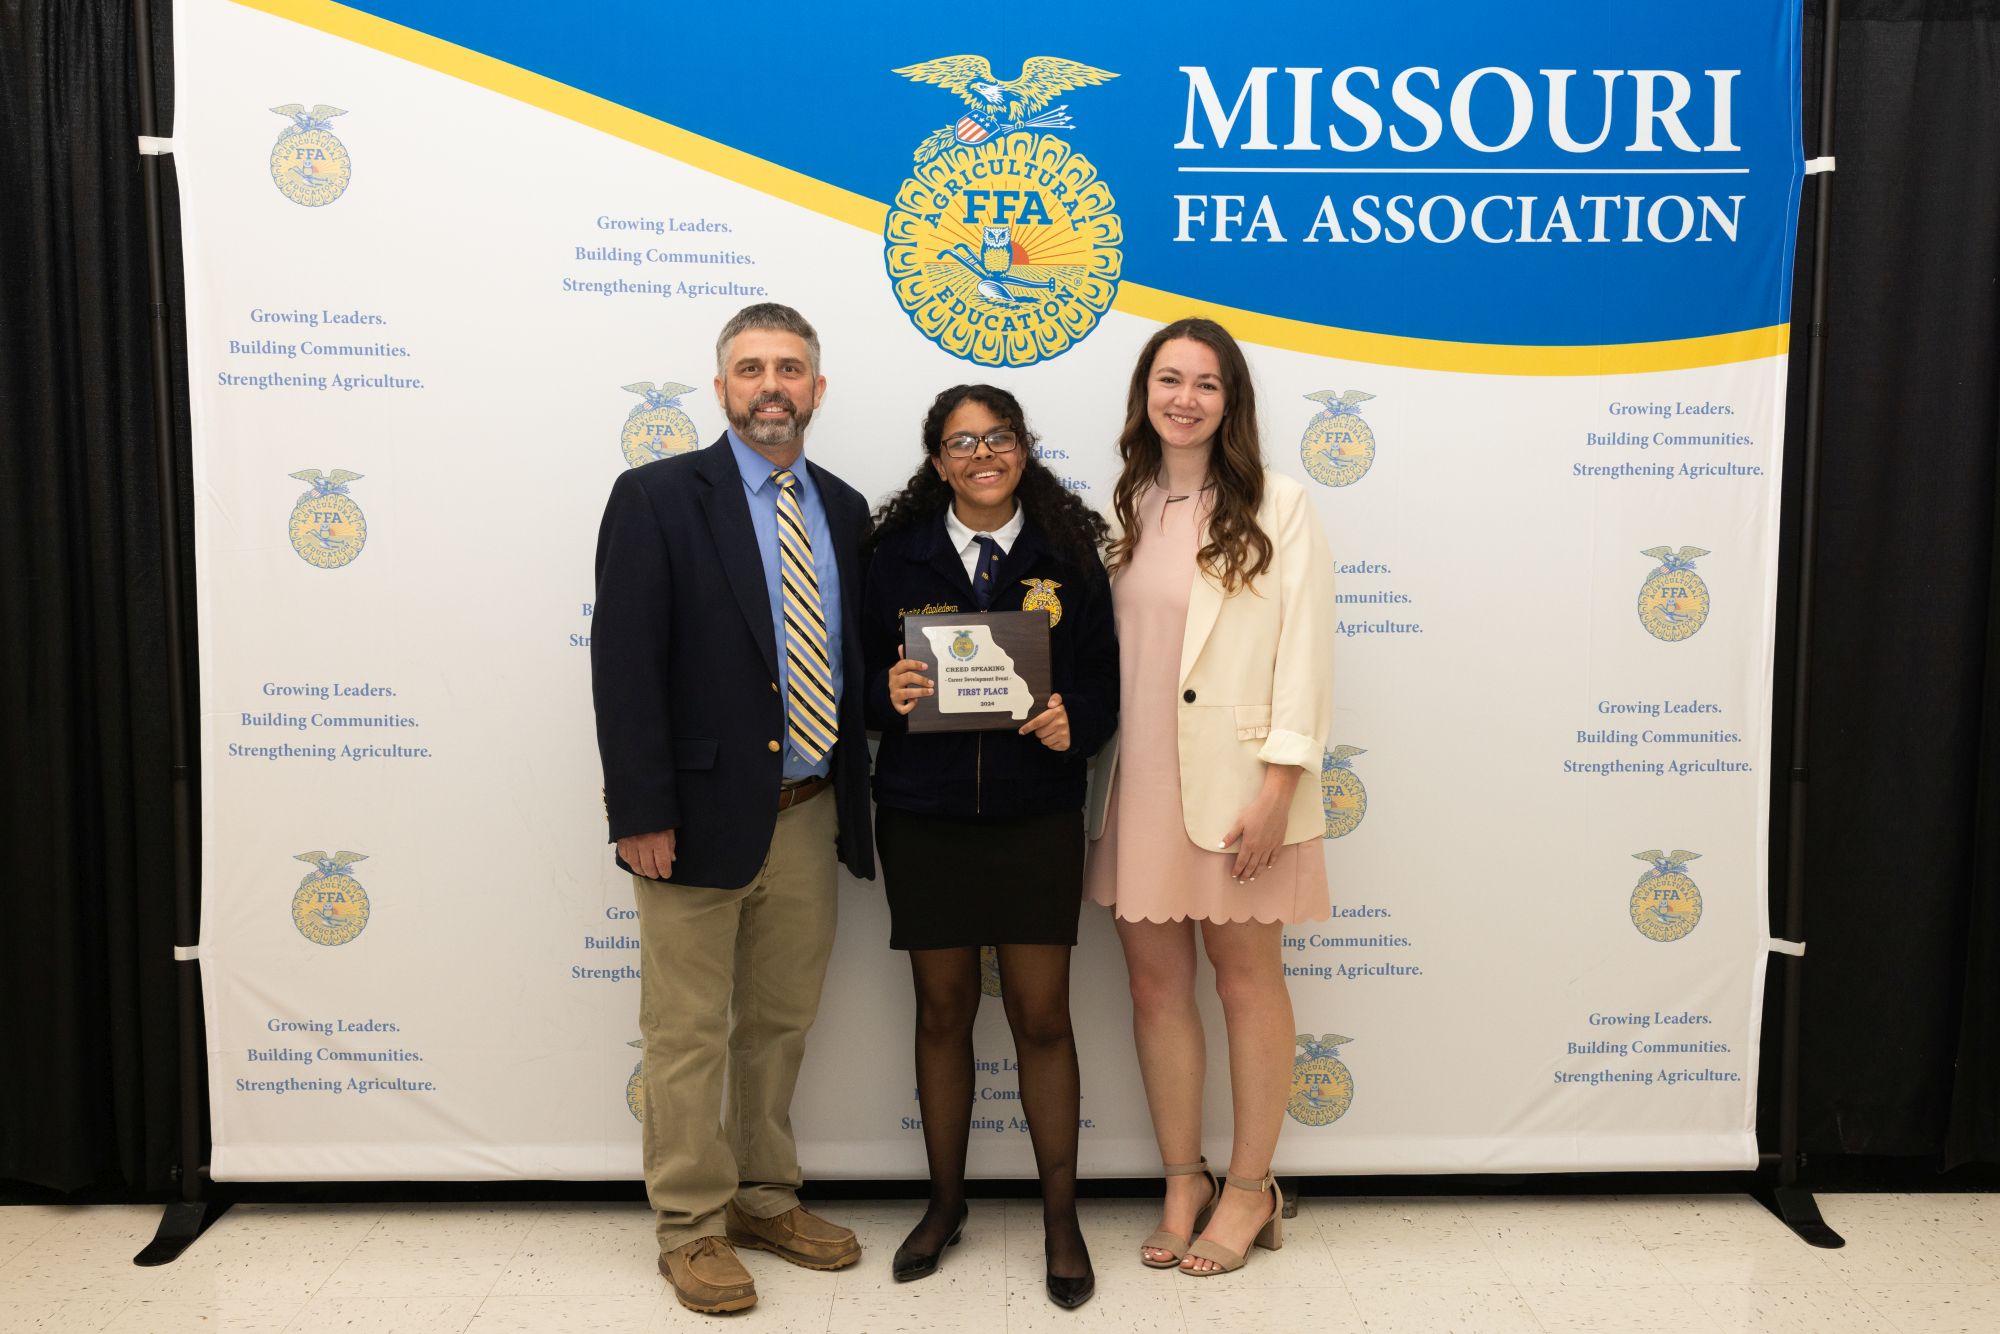 Appledorn wins Missouri FFA creed speaking competition